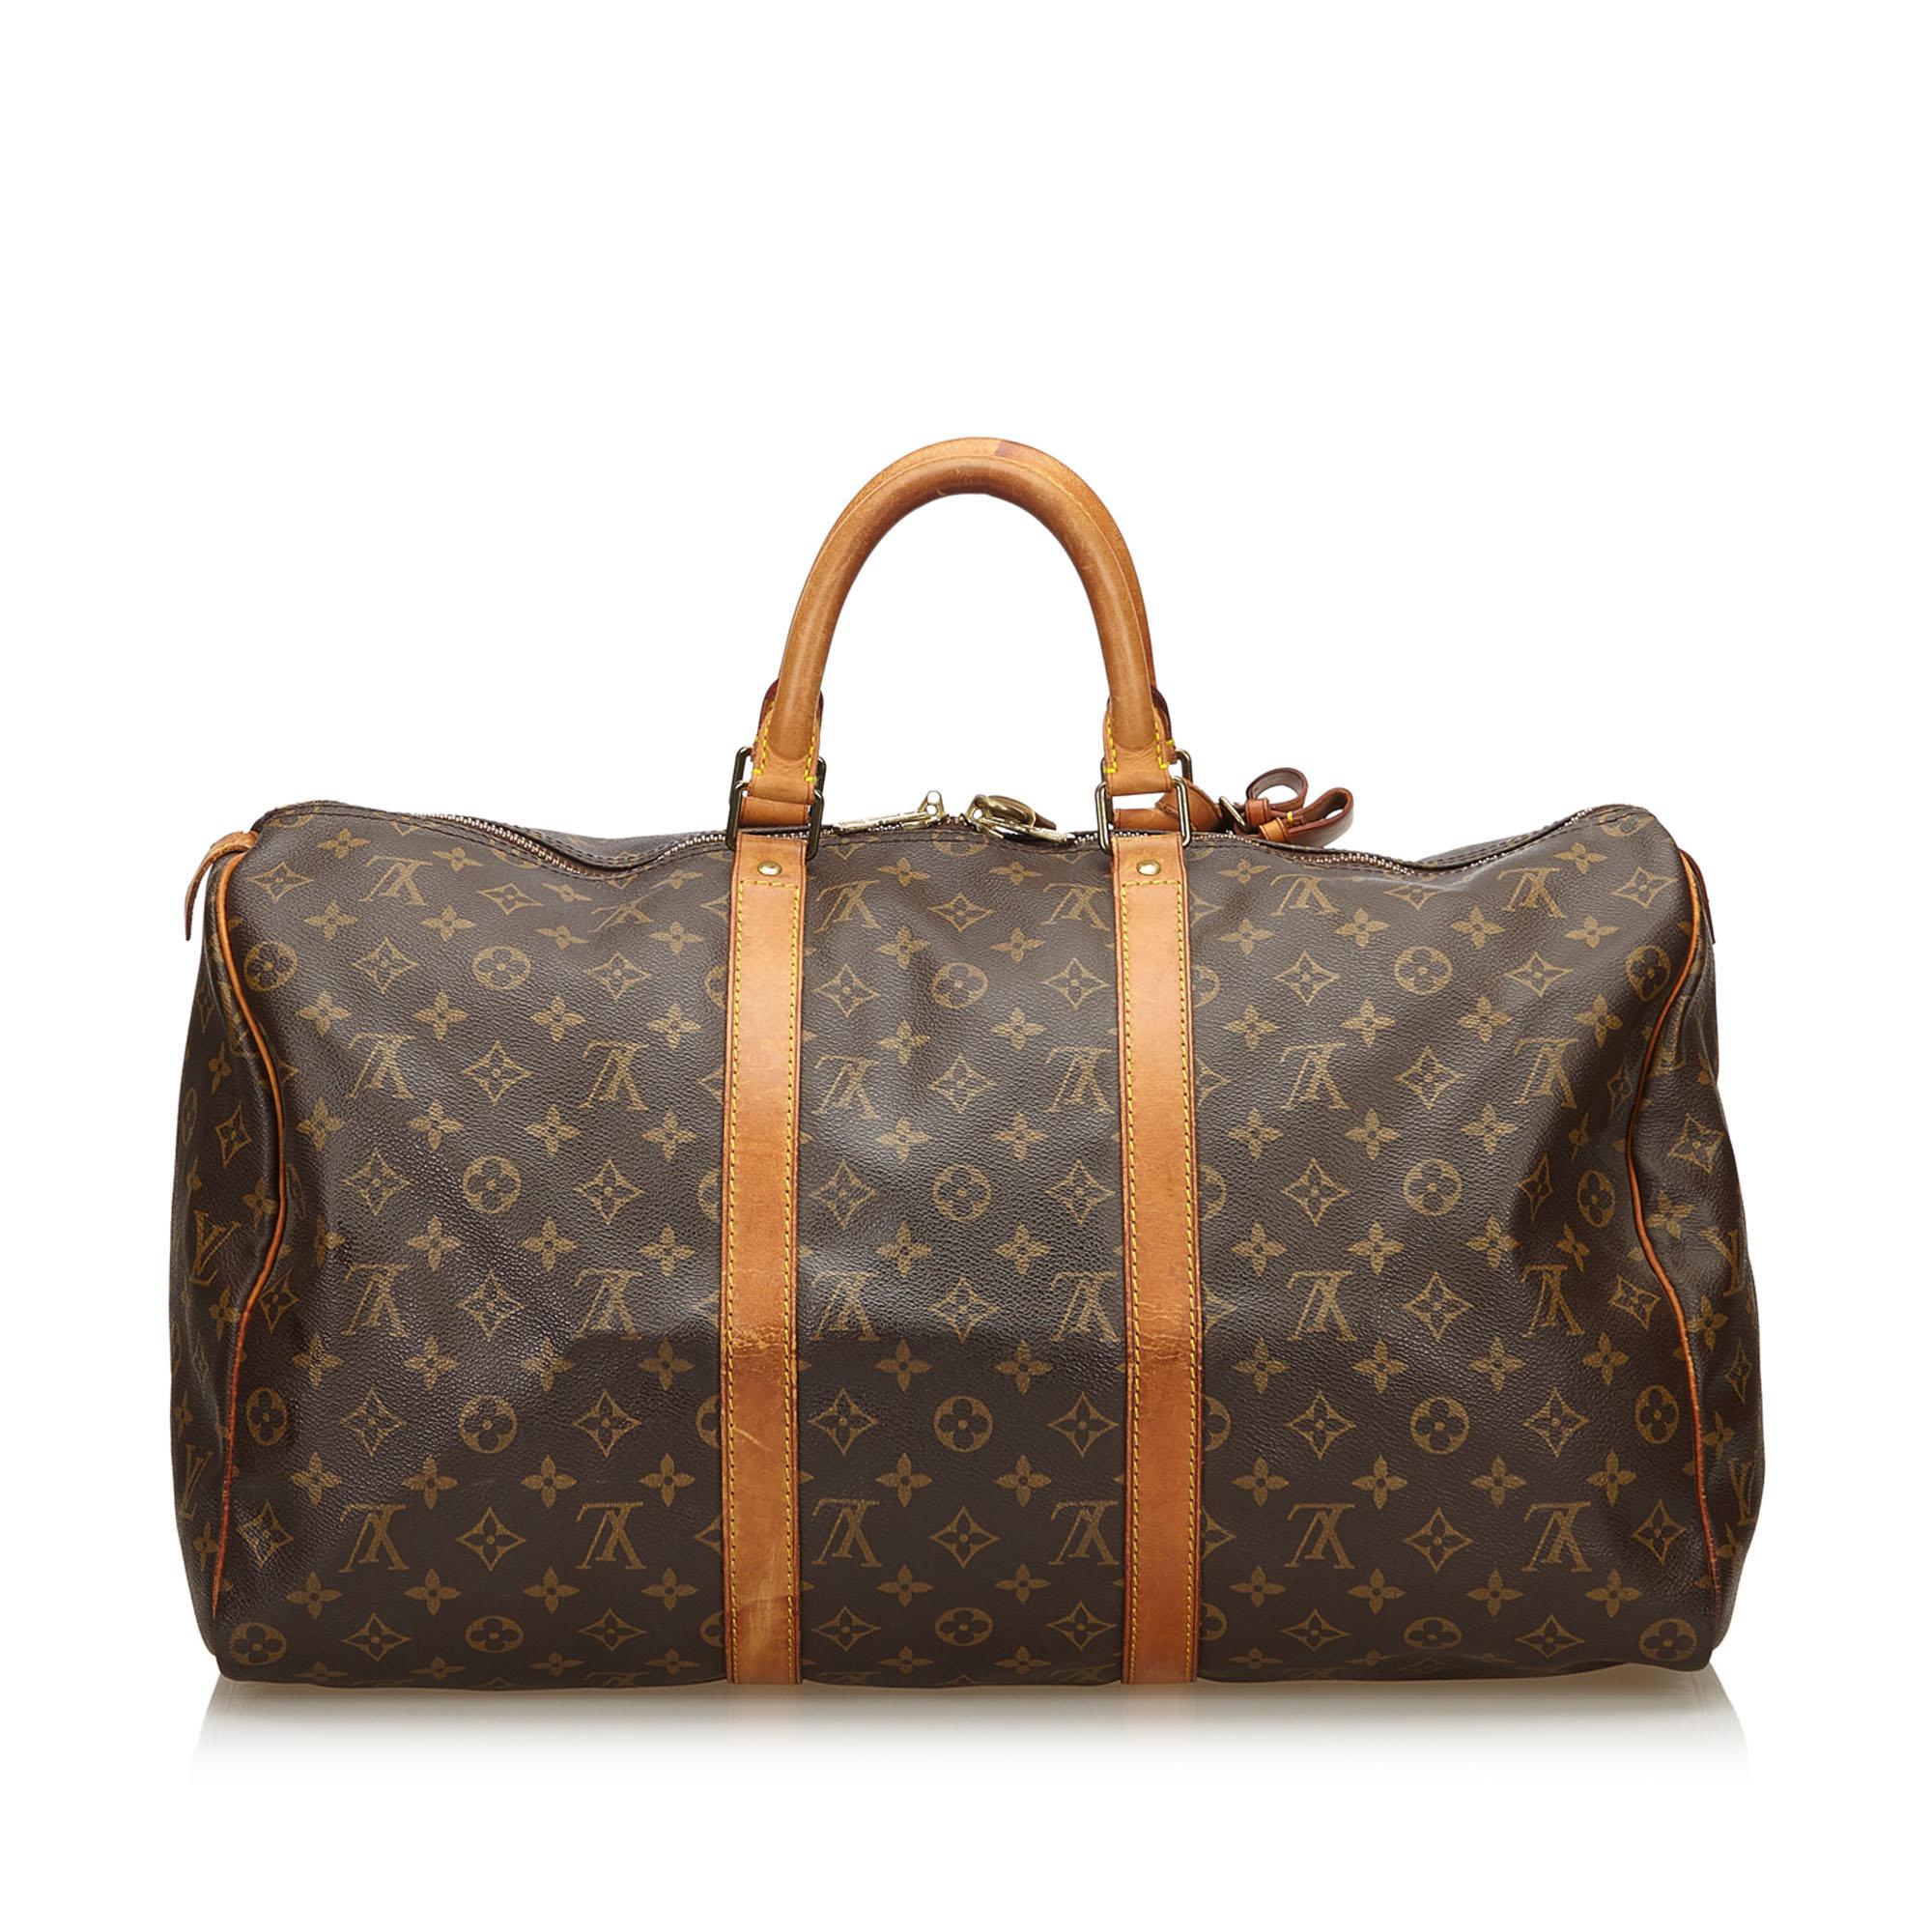 Louis Vuitton Monogram Canvas Keepall 60 Bag in Brown - Lyst